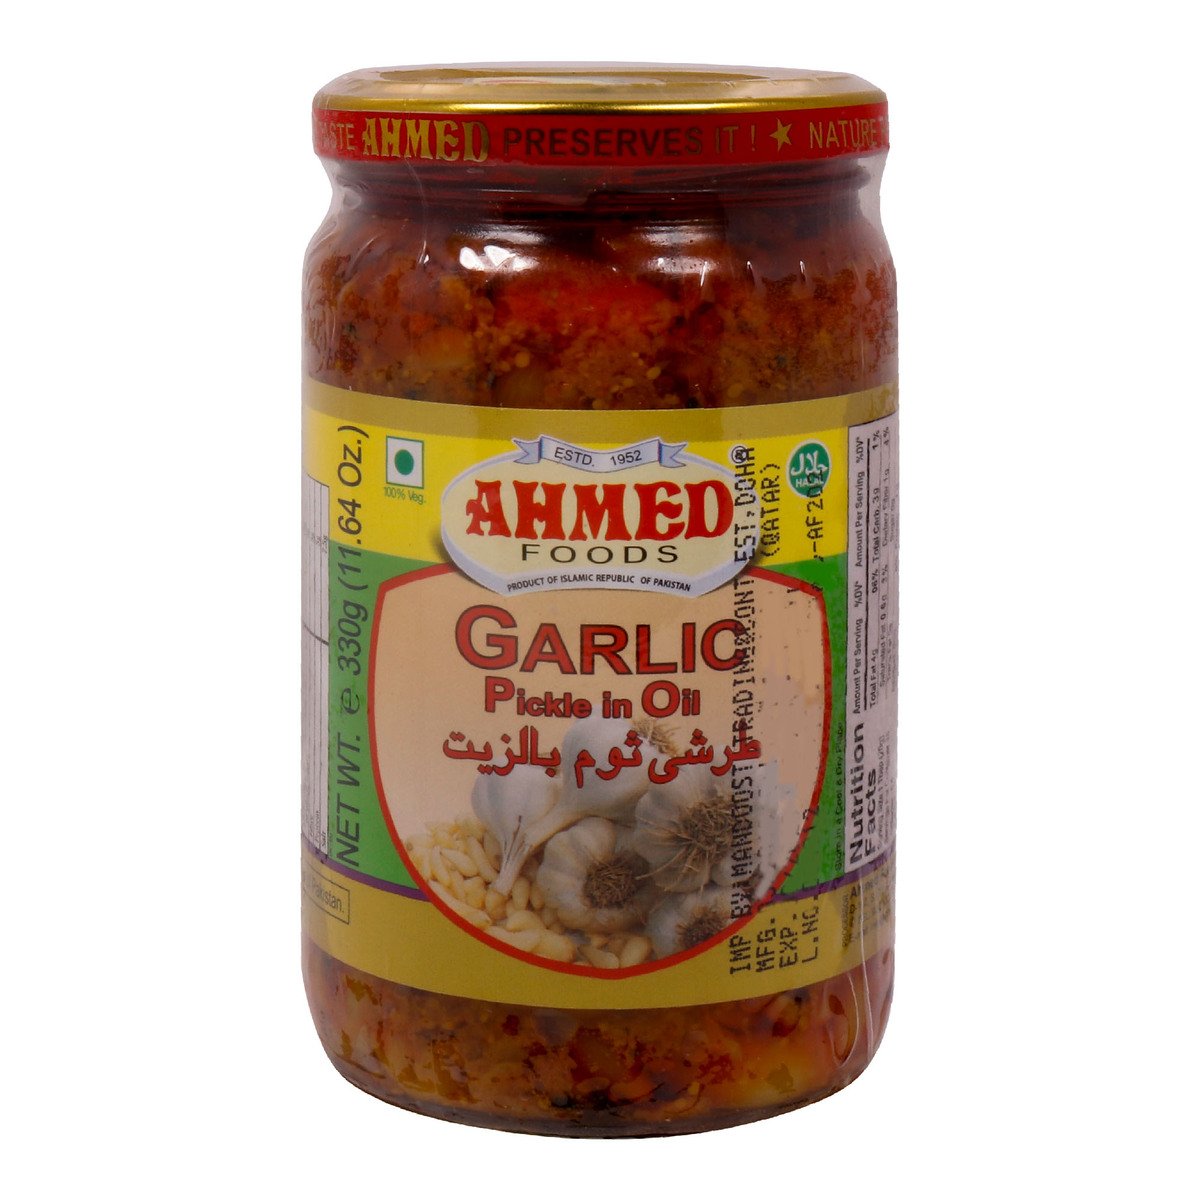 Ahmed Garlic Pickle in Oil 330 g